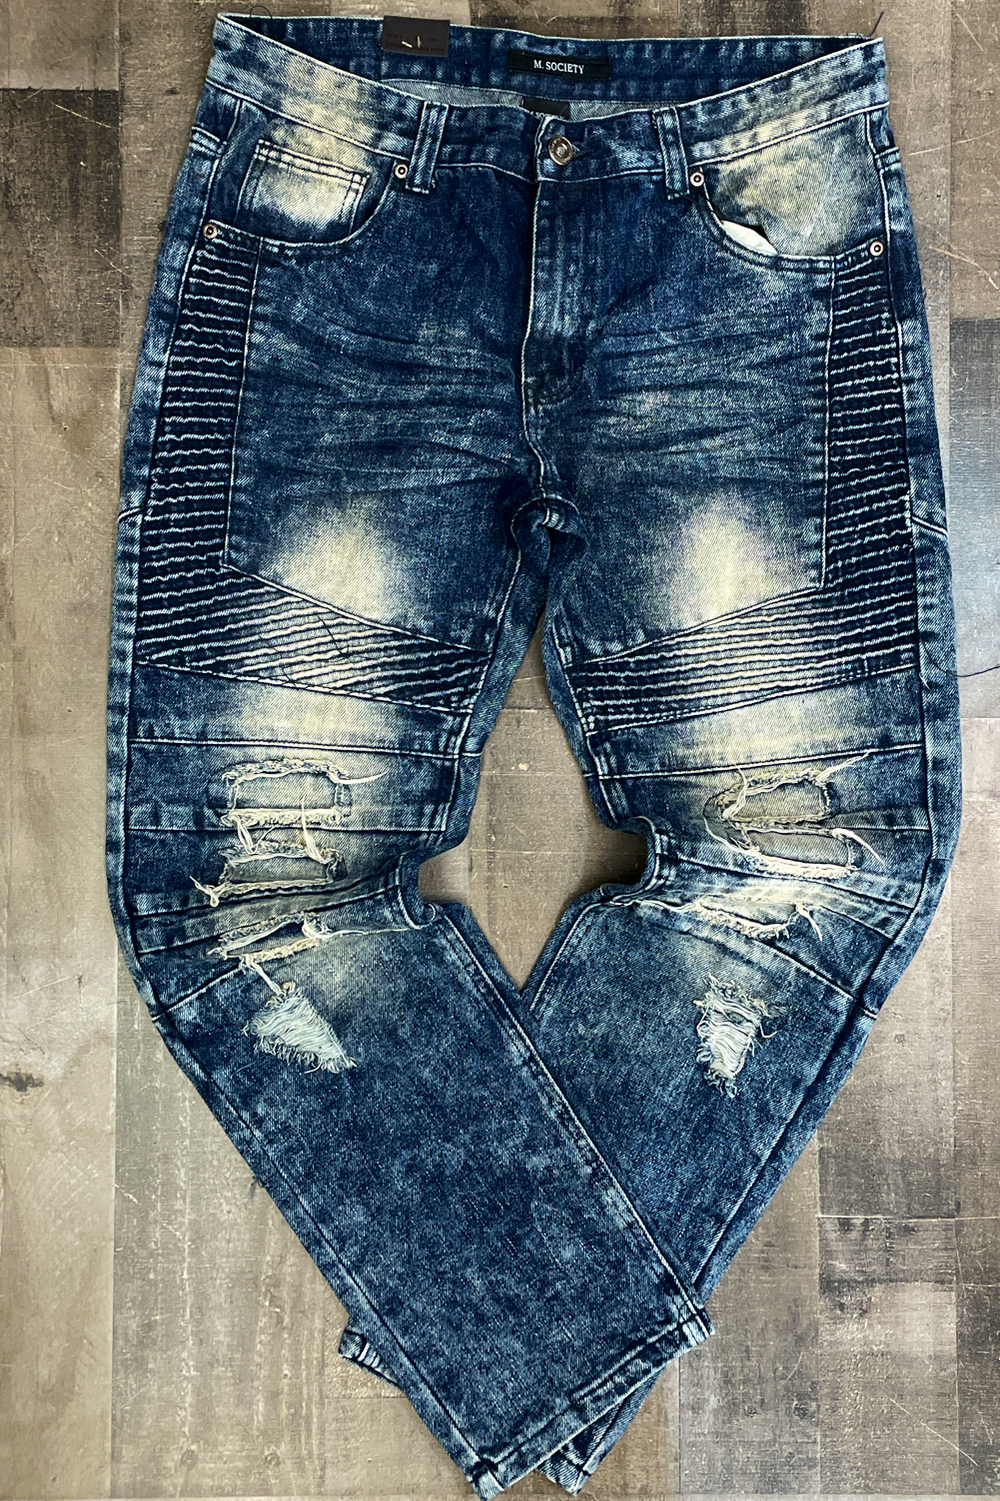 M. Society- vintage jeans